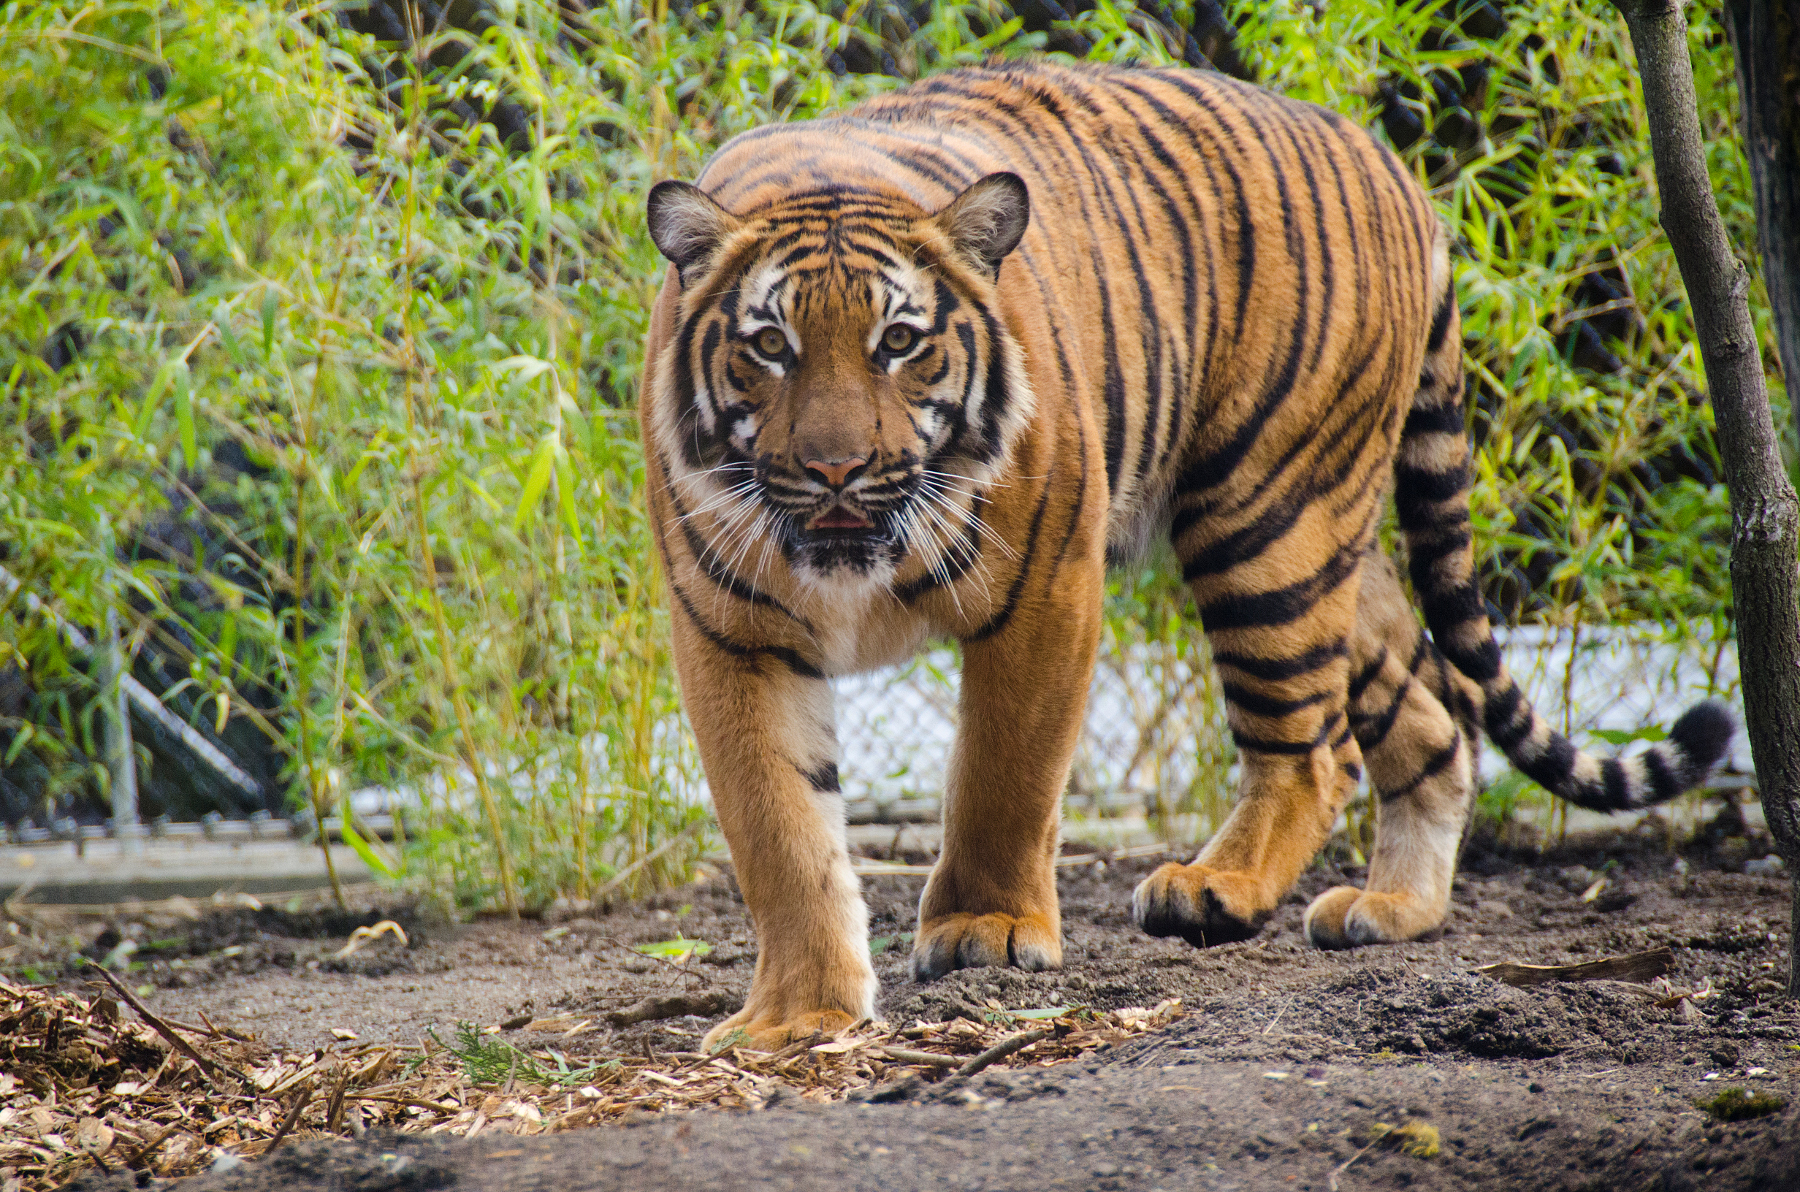 Tigers at Woodland Park Zoo; photo credit: Ryan Hawk